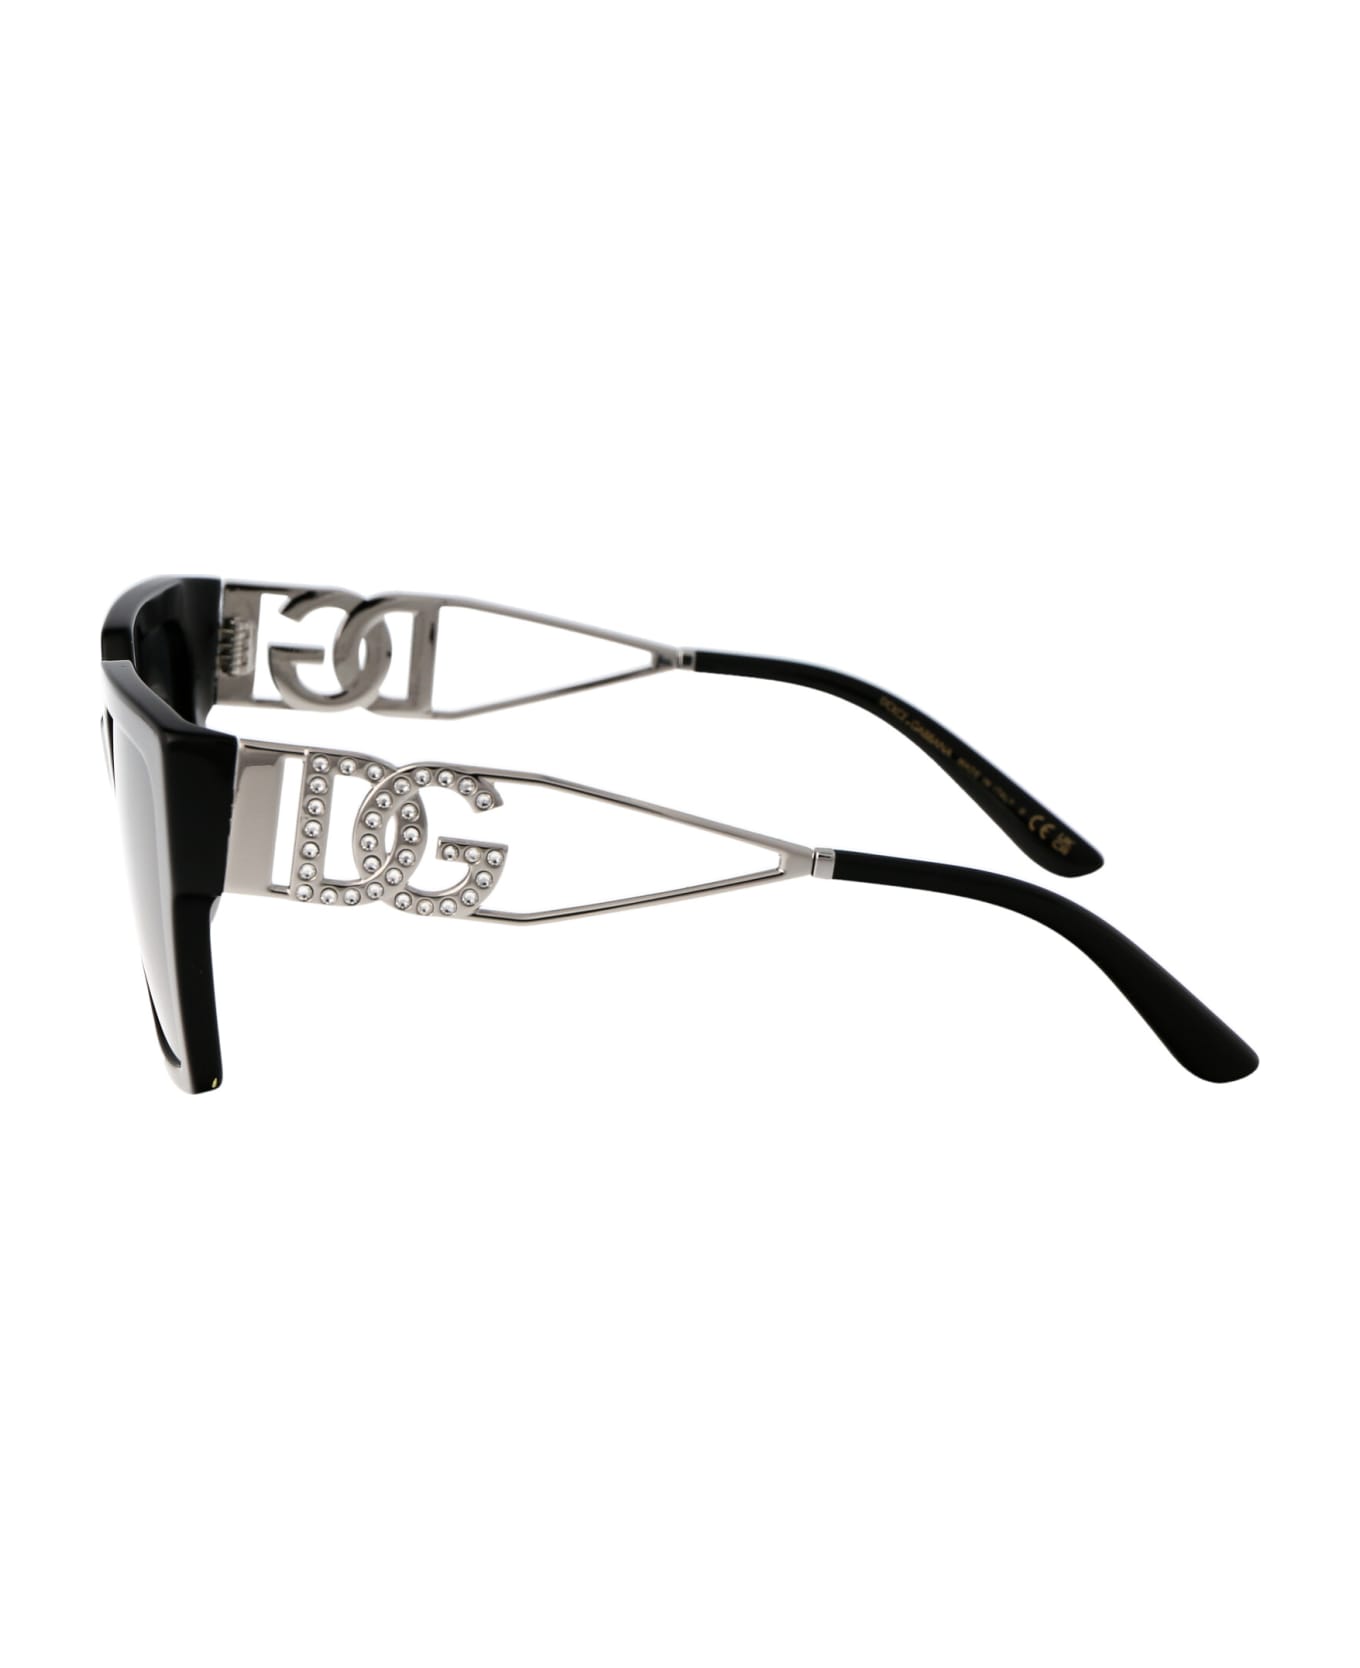 Dolce & Gabbana Eyewear 0dg4446b Sunglasses - 501/87 BLACK サングラス